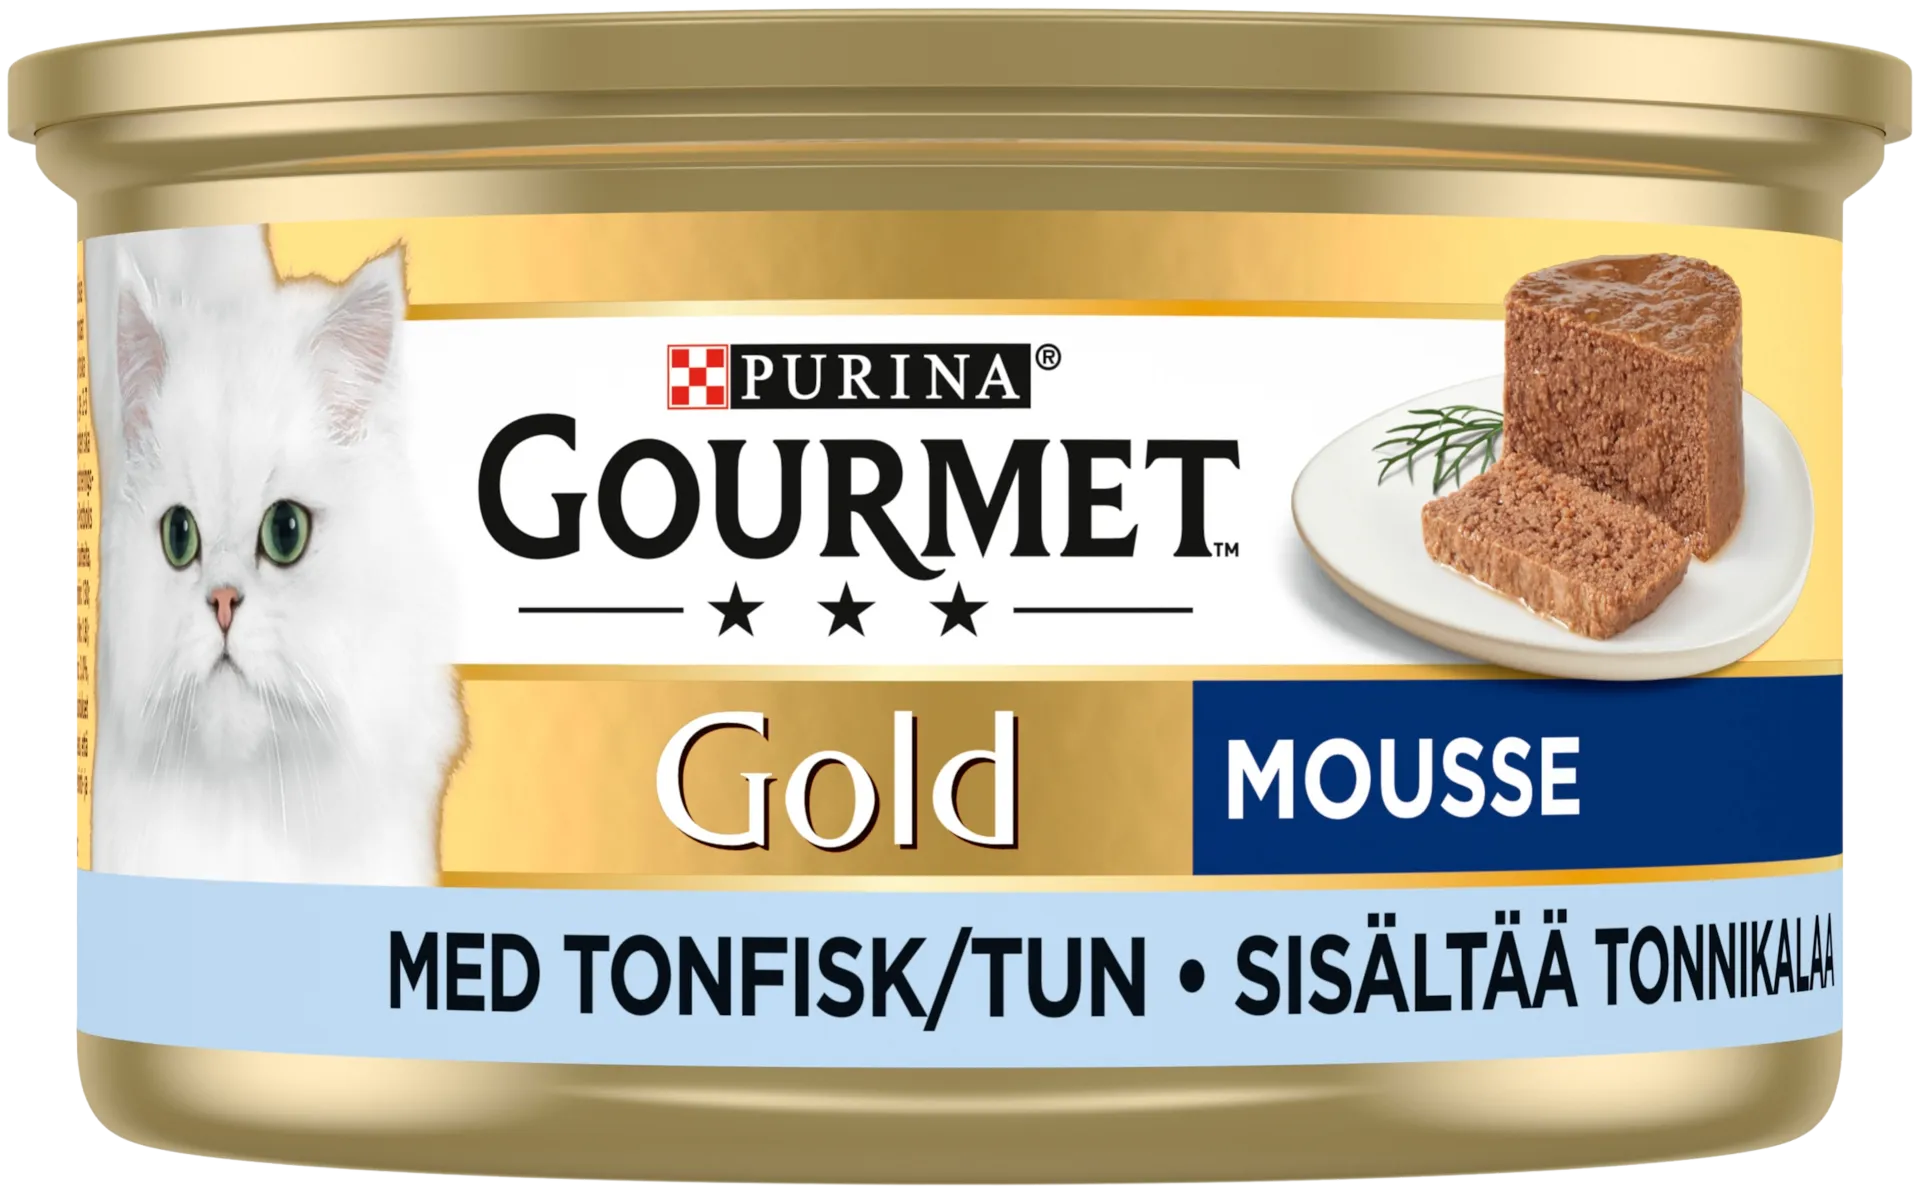 Gourmet 85g Gold Tonnikala Mousse kissanruoka